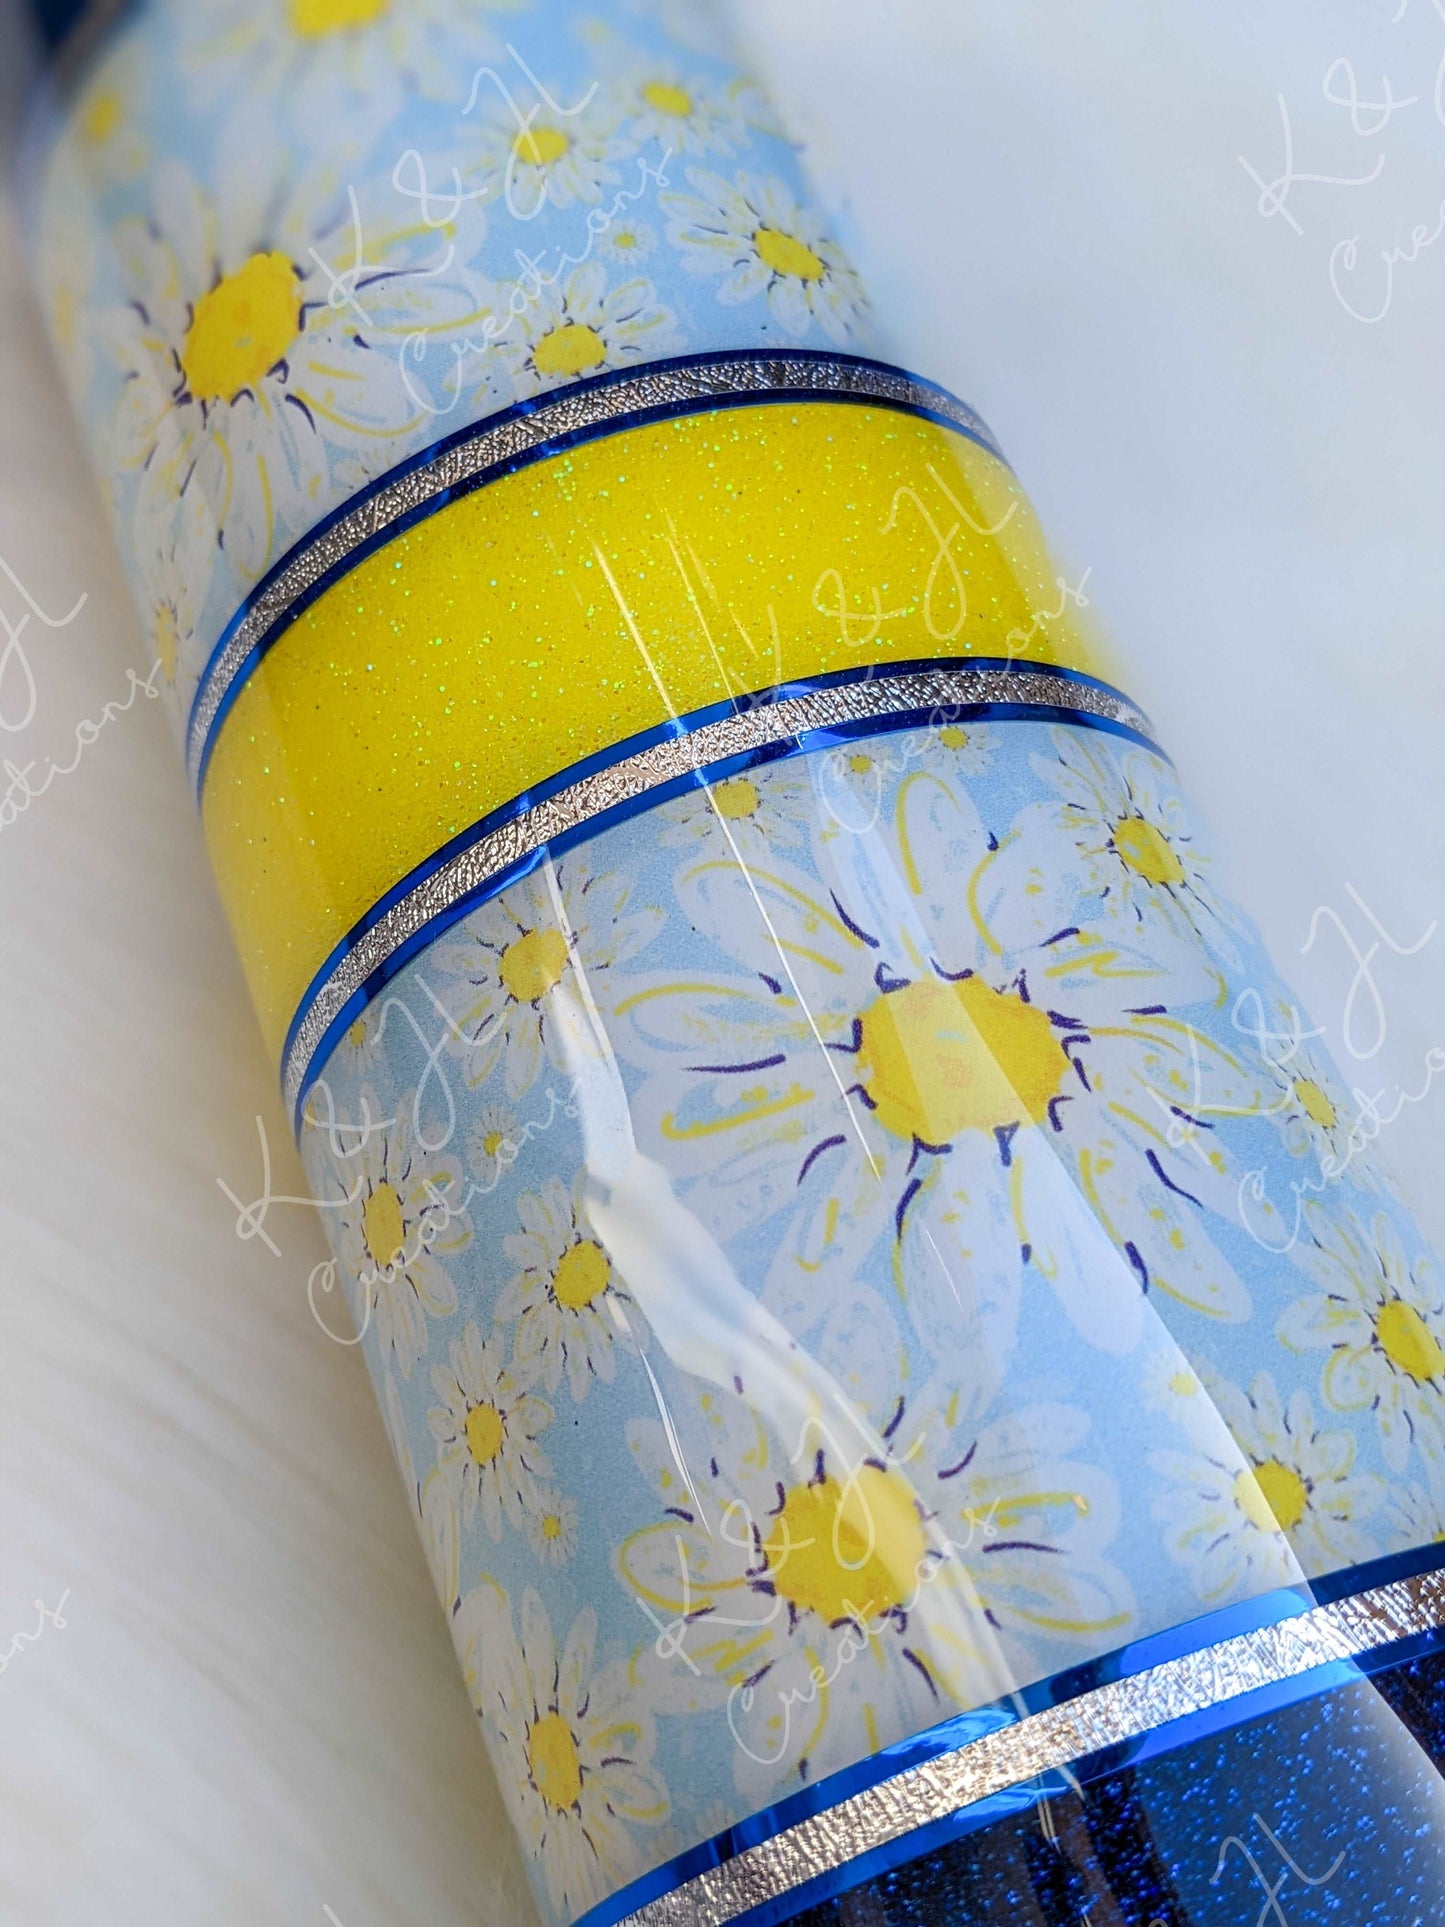 30 oz. Skinny Glitter Tumbler, Navy Blue & Yellow Glitter, Daisy Floral Pattern Design, Gift for Her, Custom Epoxy Tumbler, Floral Cup, Mug